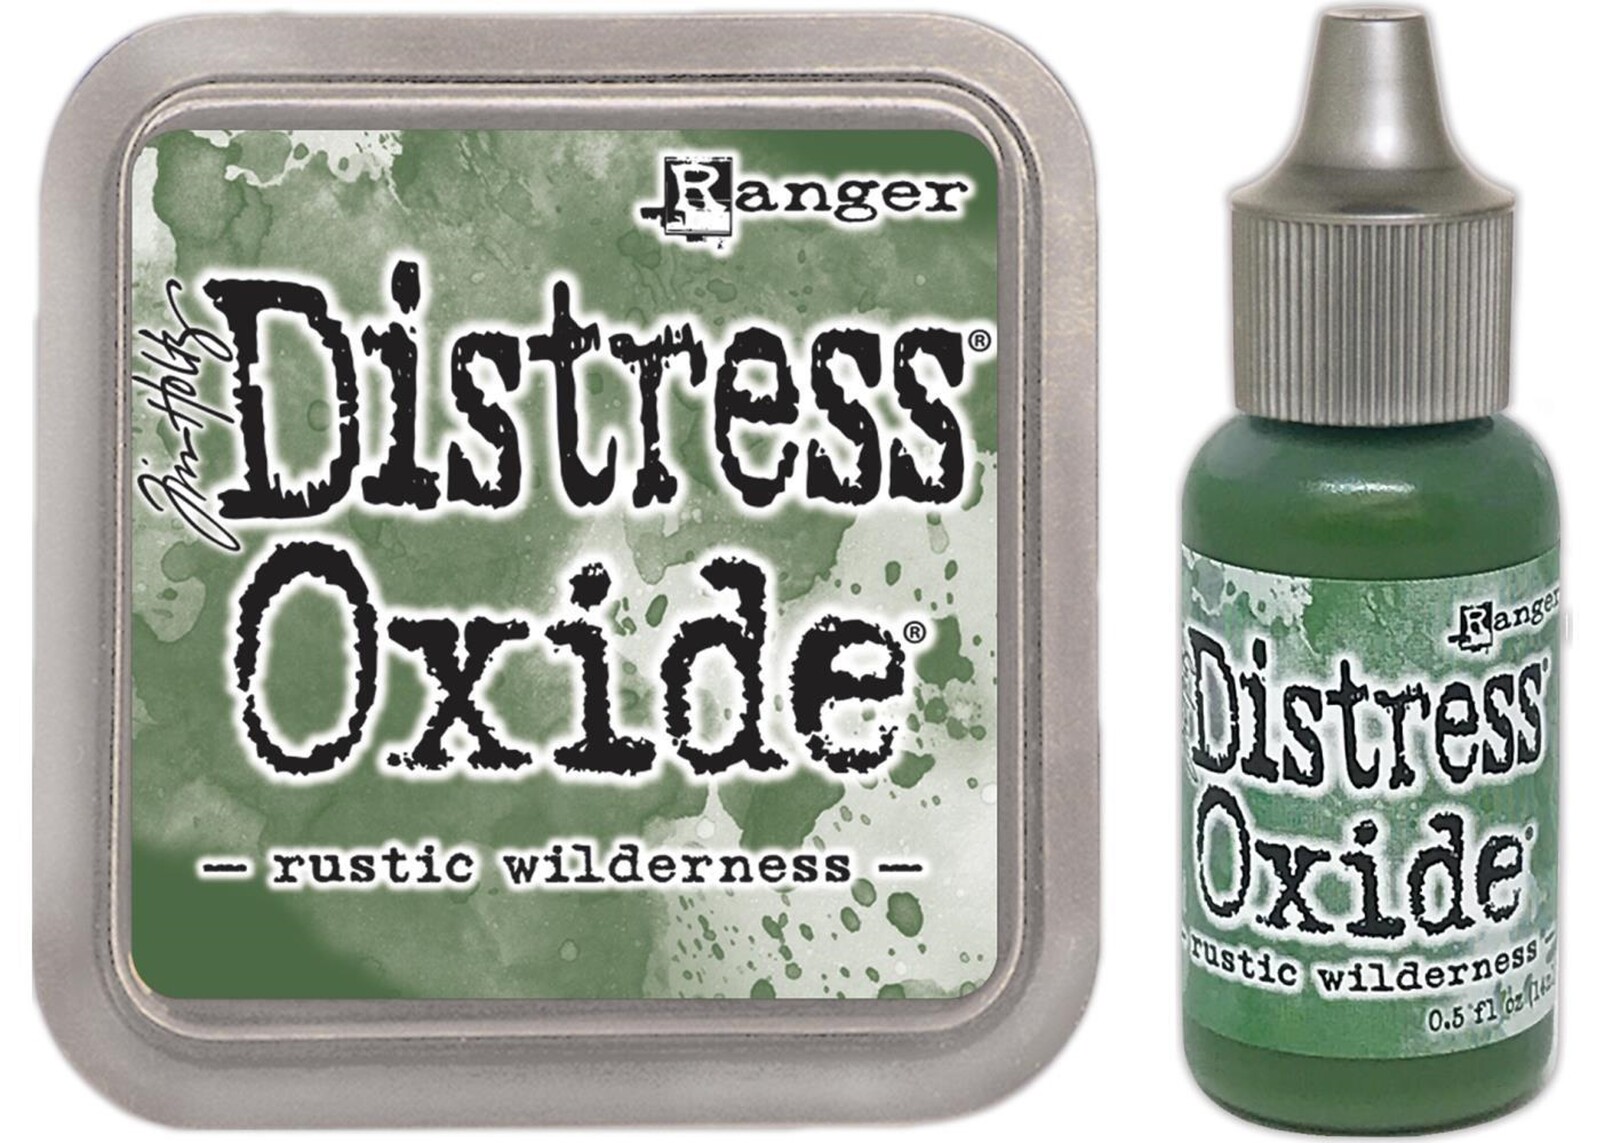 Tim Holtz Distress Oxide Ink Pad + Reinker Rustic Wilderness